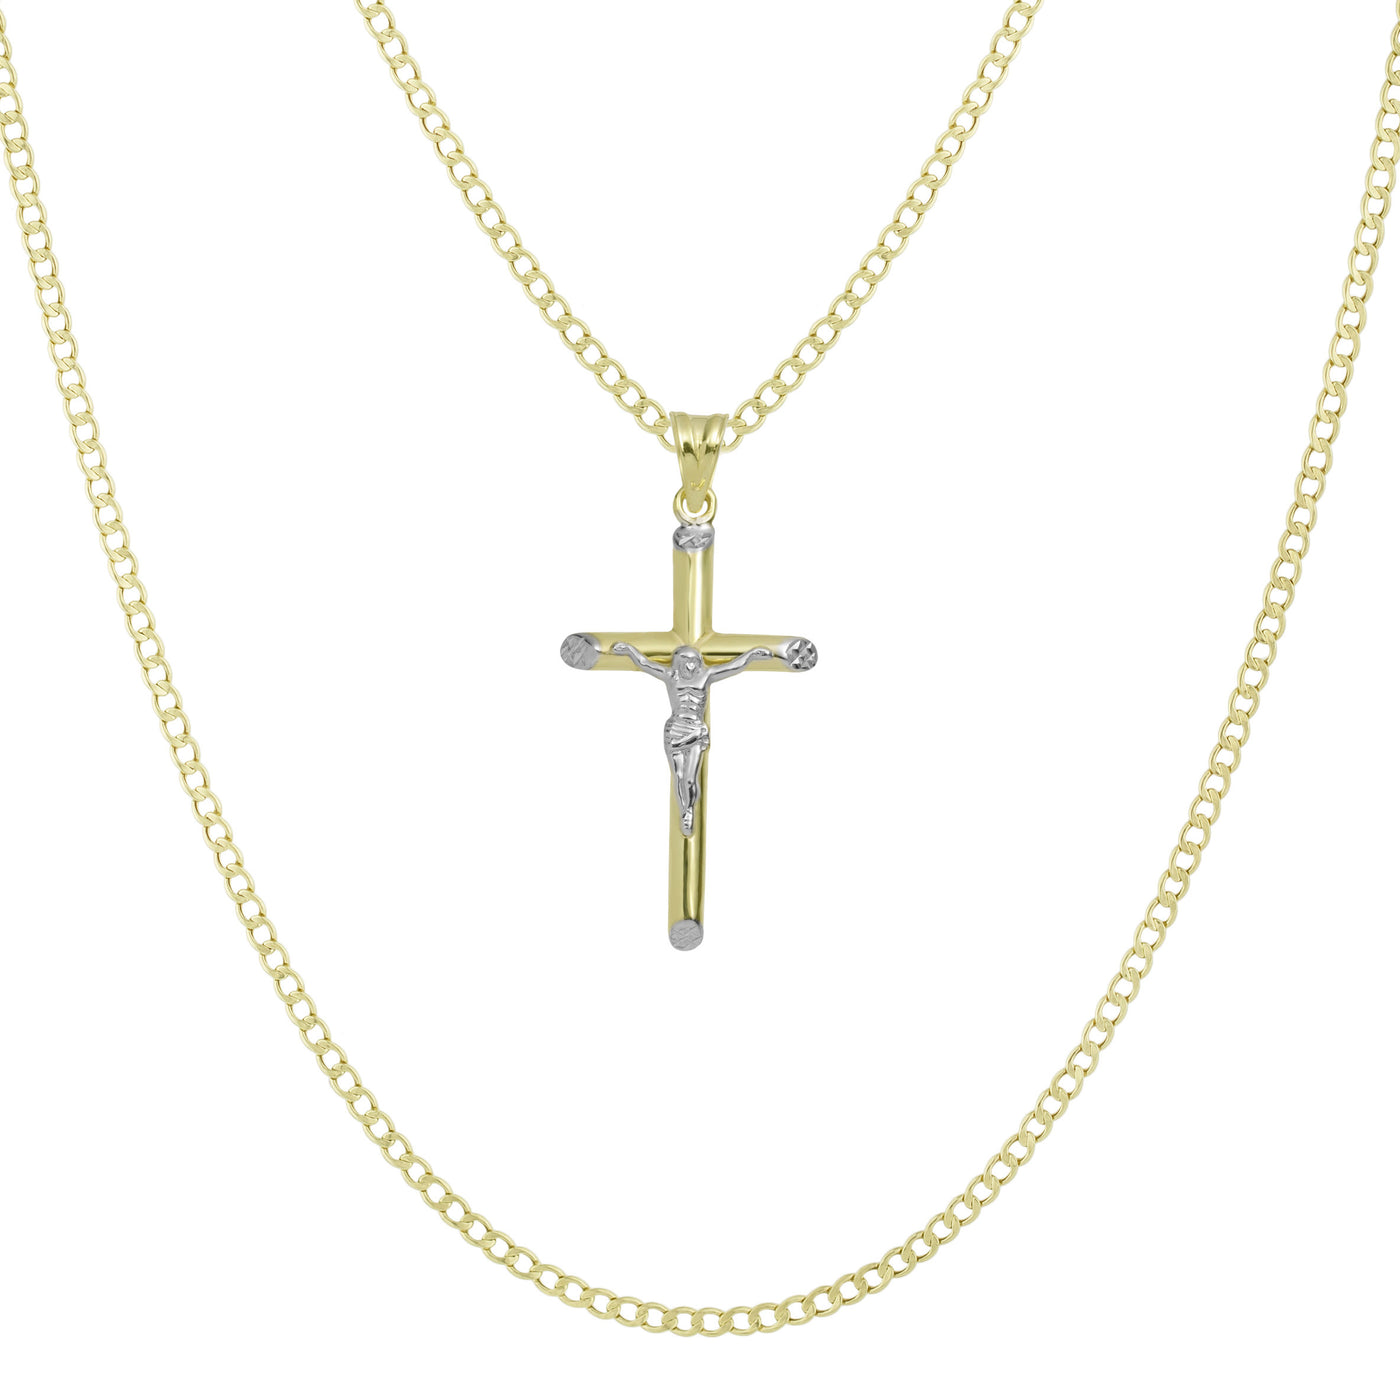 1 1/2" Jesus Cross Crucifix Pendant & Chain Necklace Set 10K Yellow White Gold